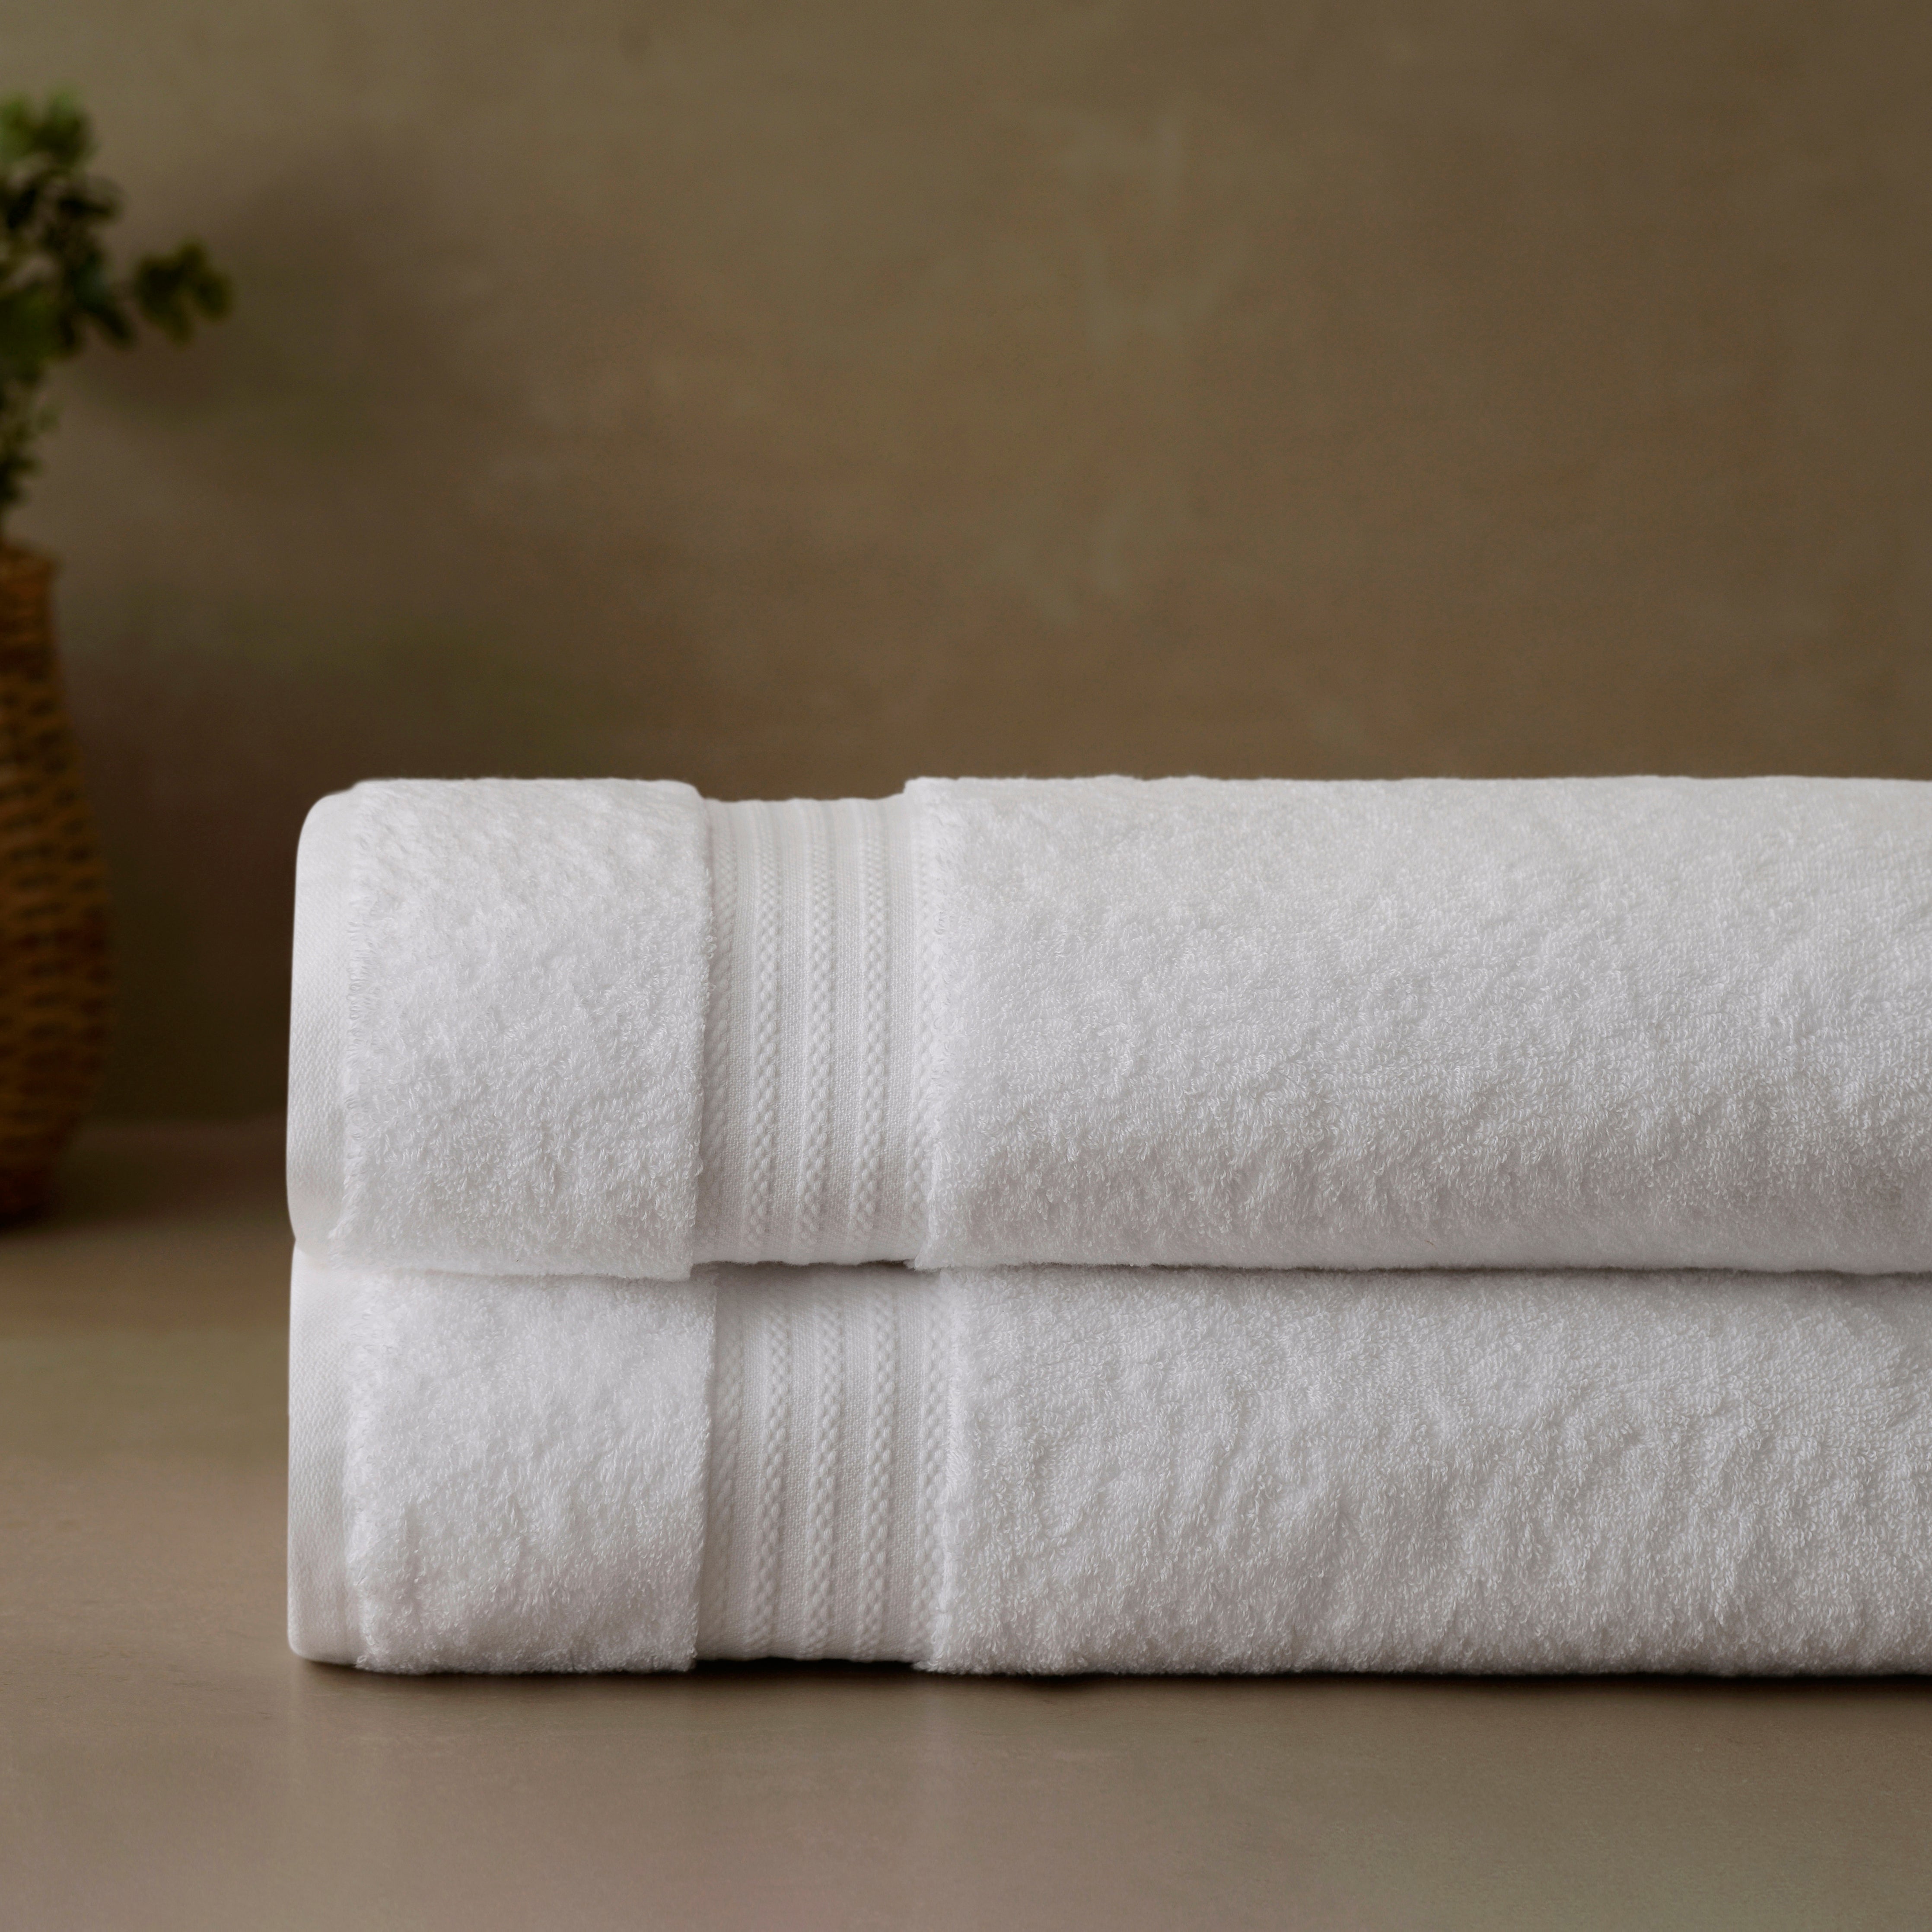 Xtra Large 100% Natural Organic Cotton Bath Towels - Chemical Free 100 x 160 cm